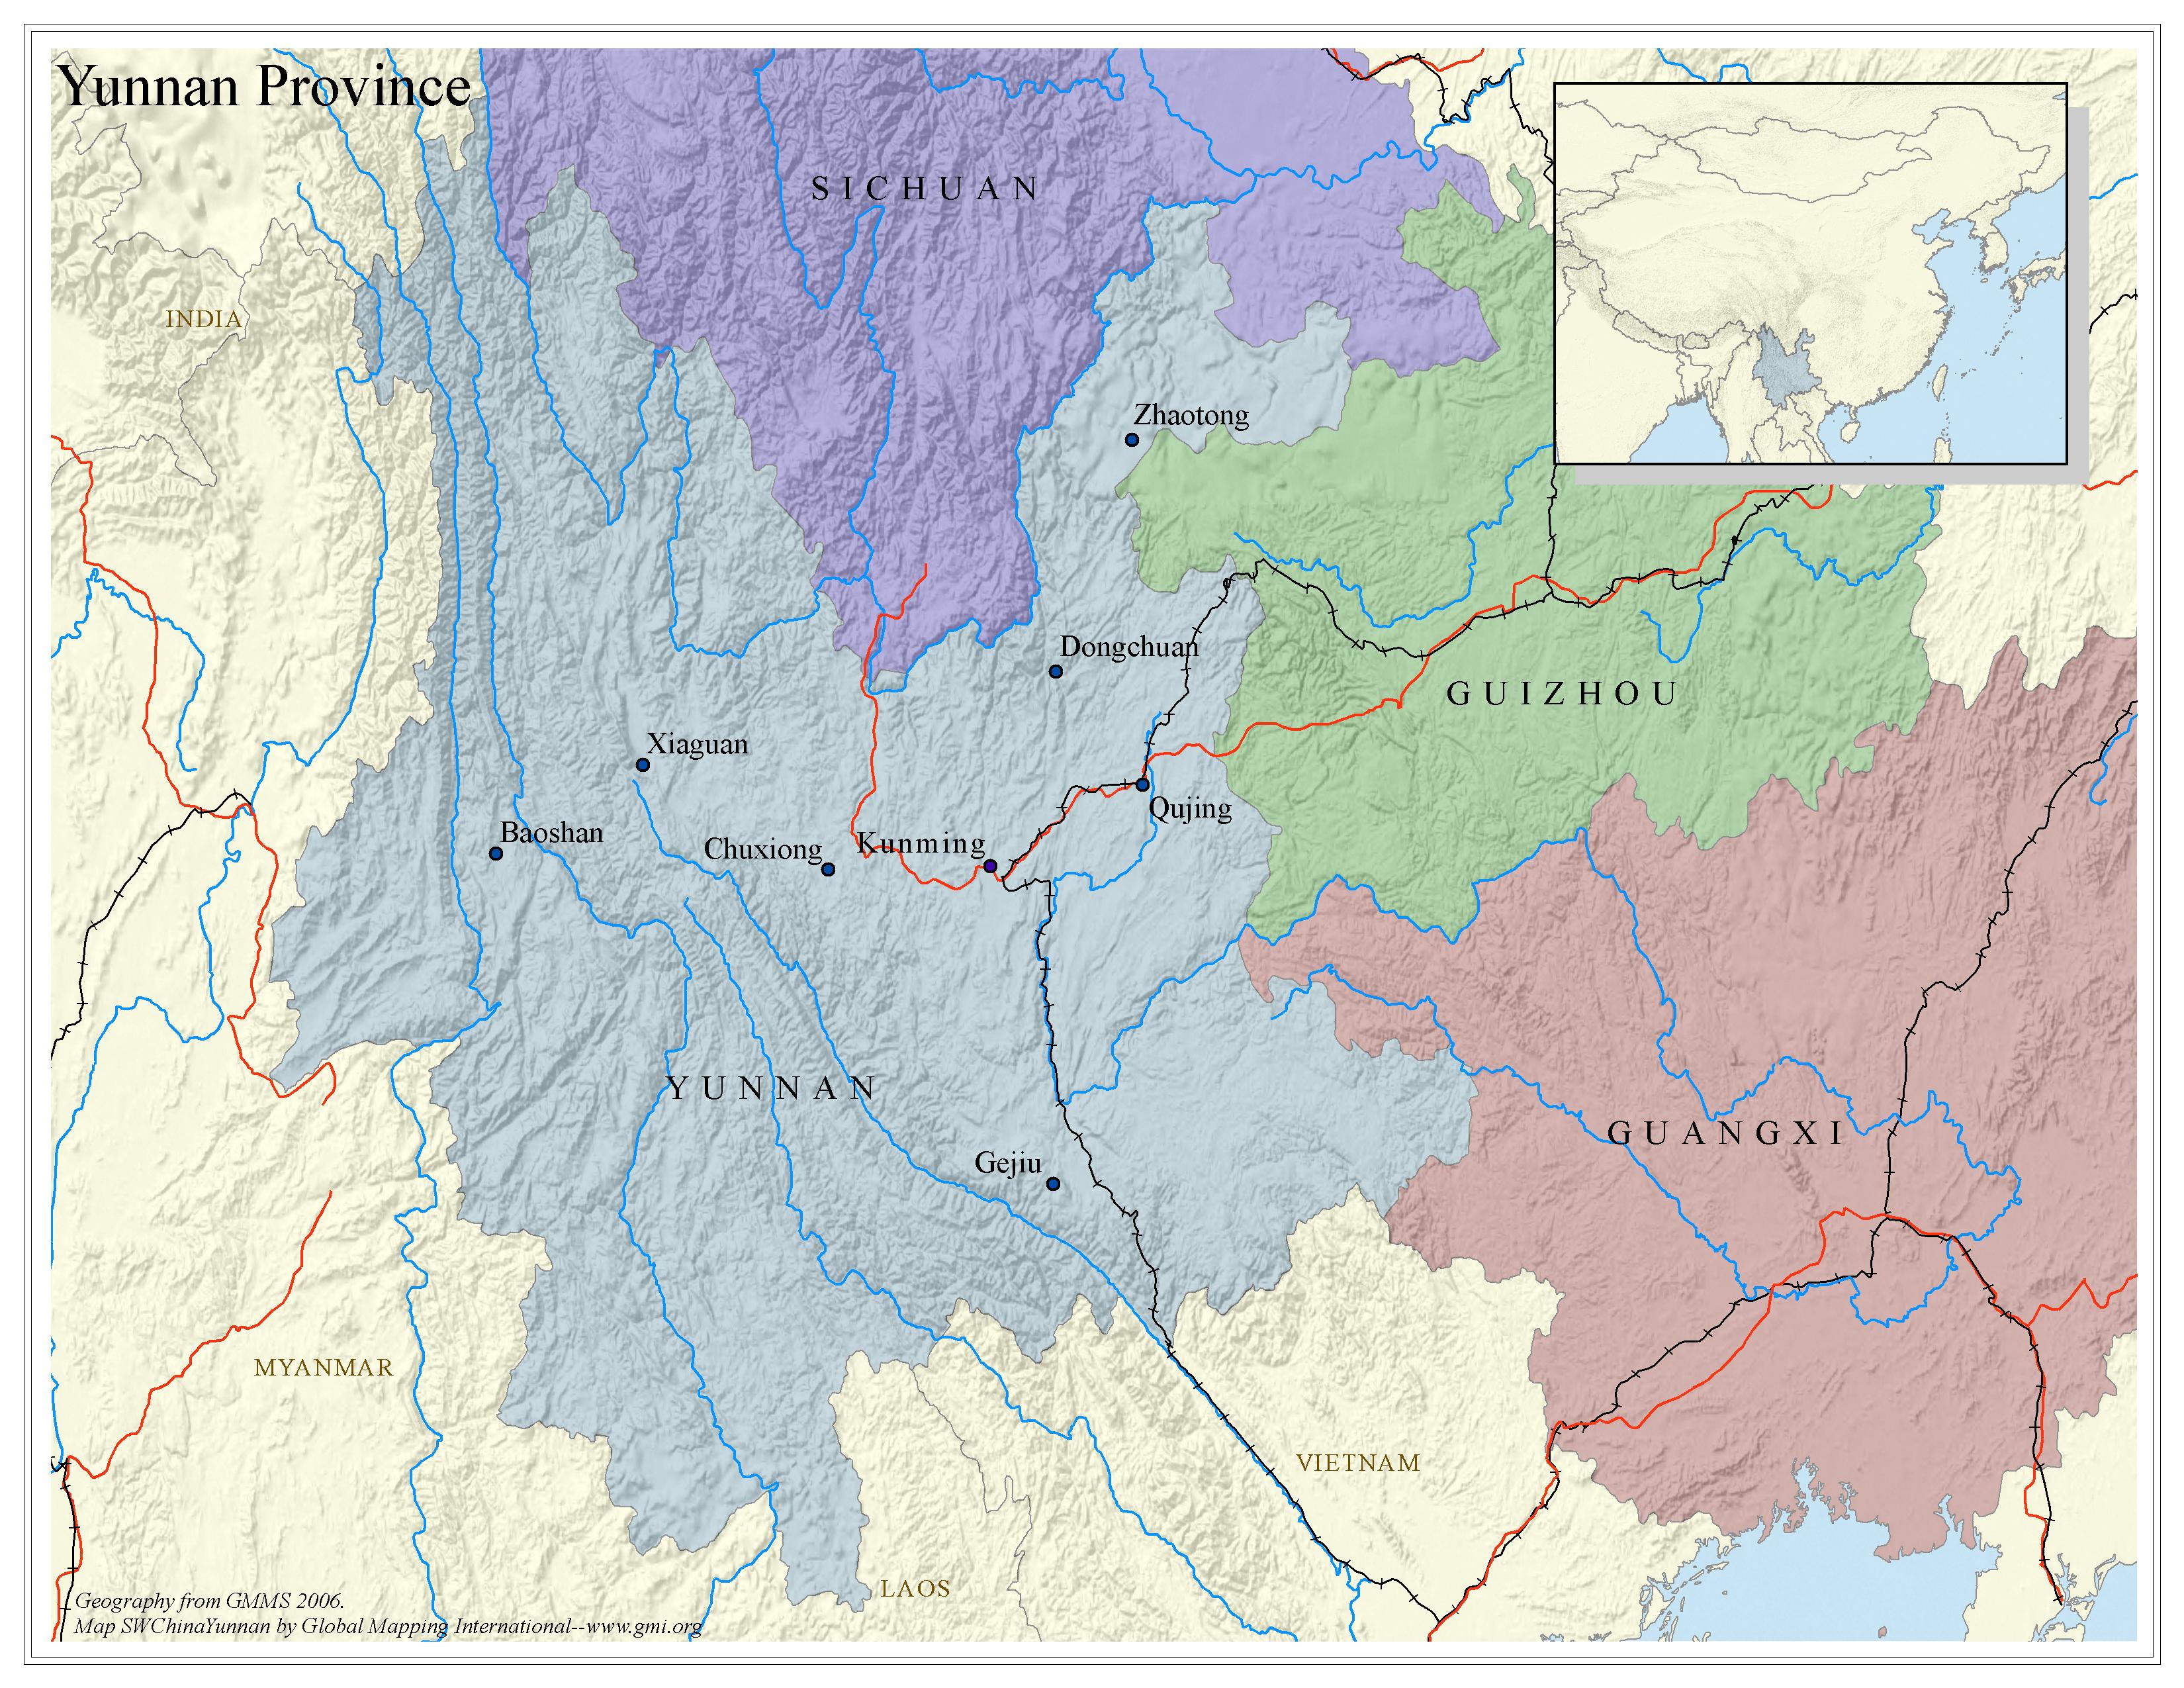 Yunnan Province - Political map